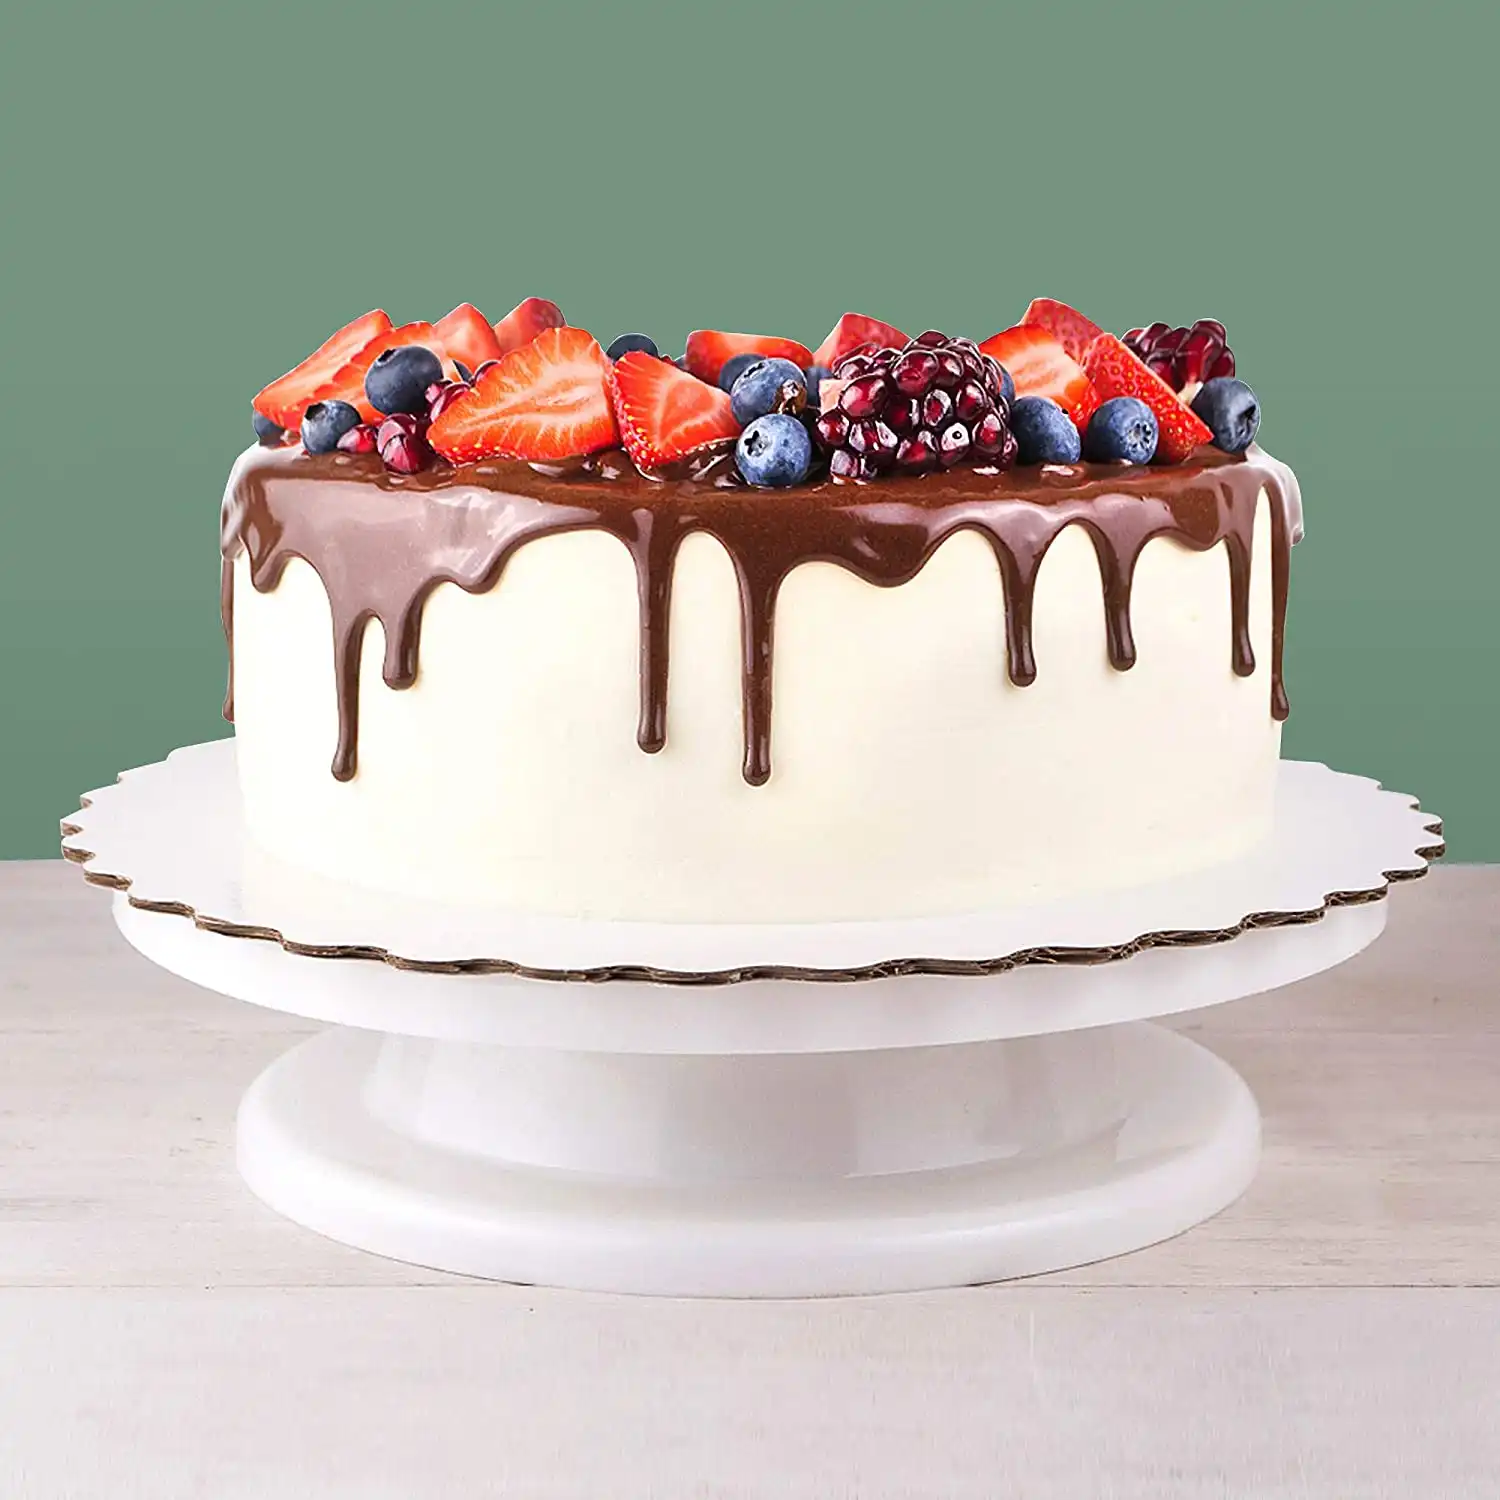 Meja Putar Putih Fondant, Alat Dekorasi Kue Plastik Premium, Penyangga untuk Memanggang Kue